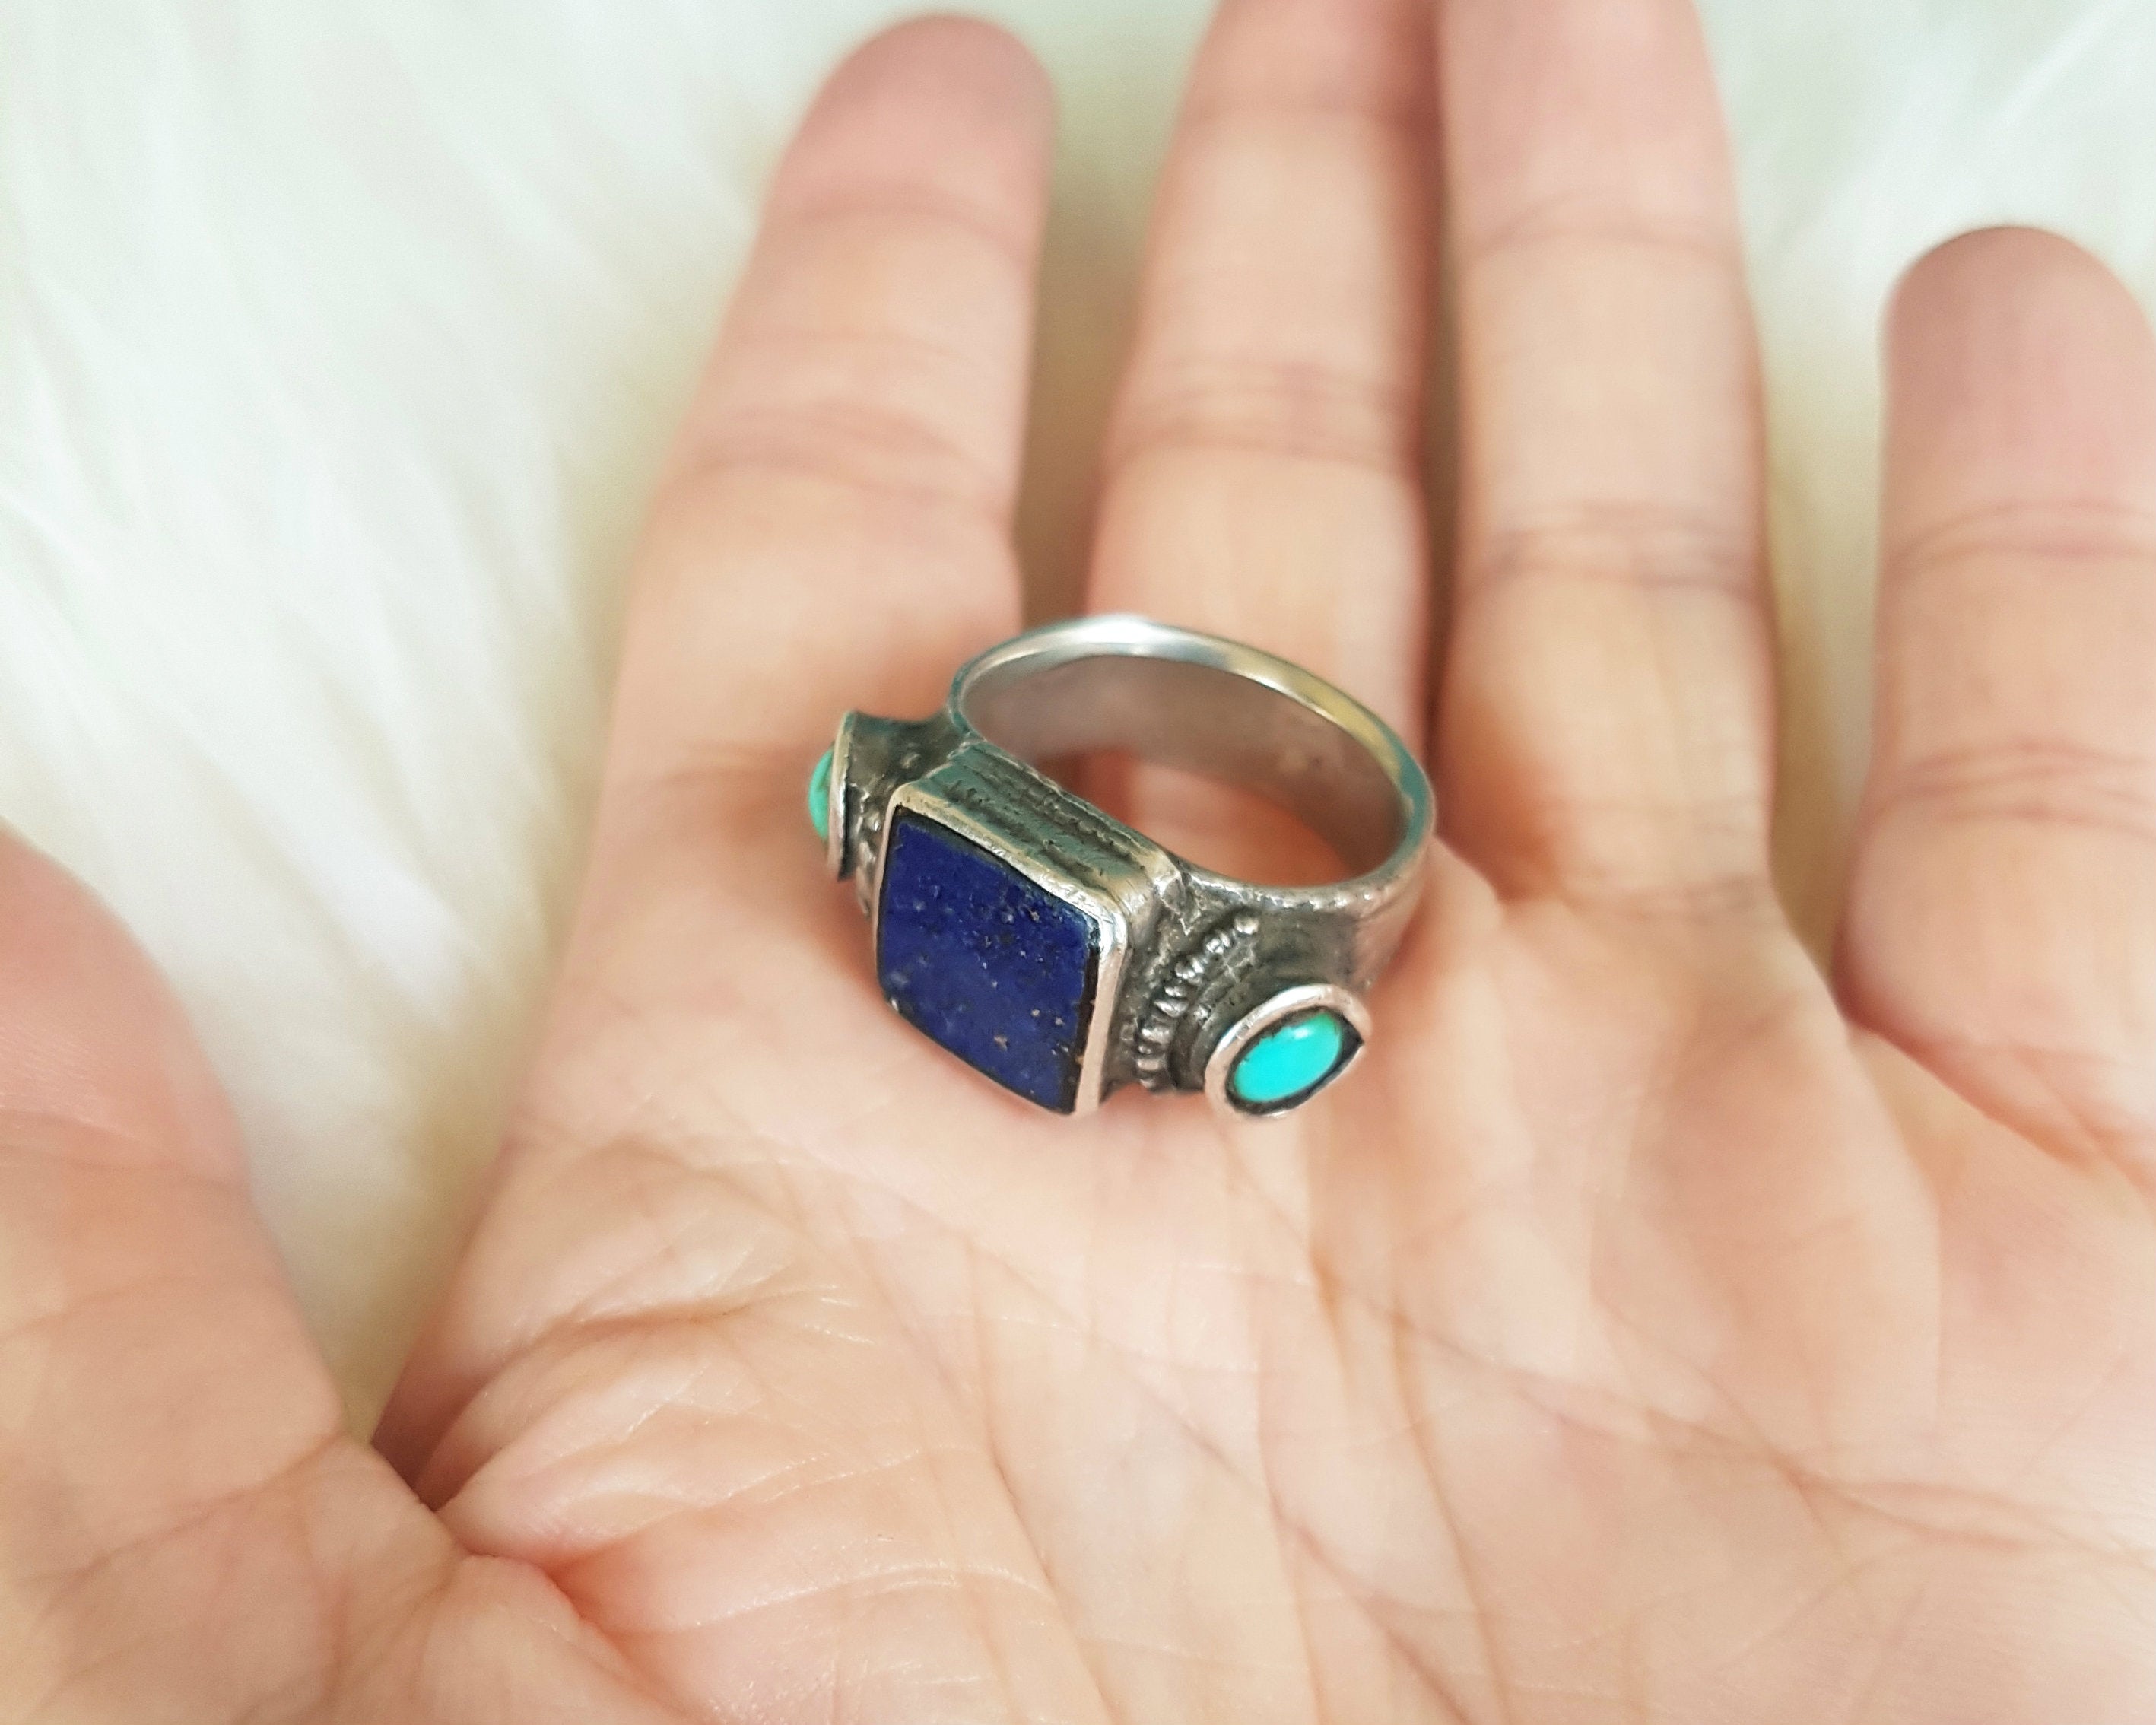 Tibetan Turquoise and Lapis Lazuli Ring - Size 7.75 / 8